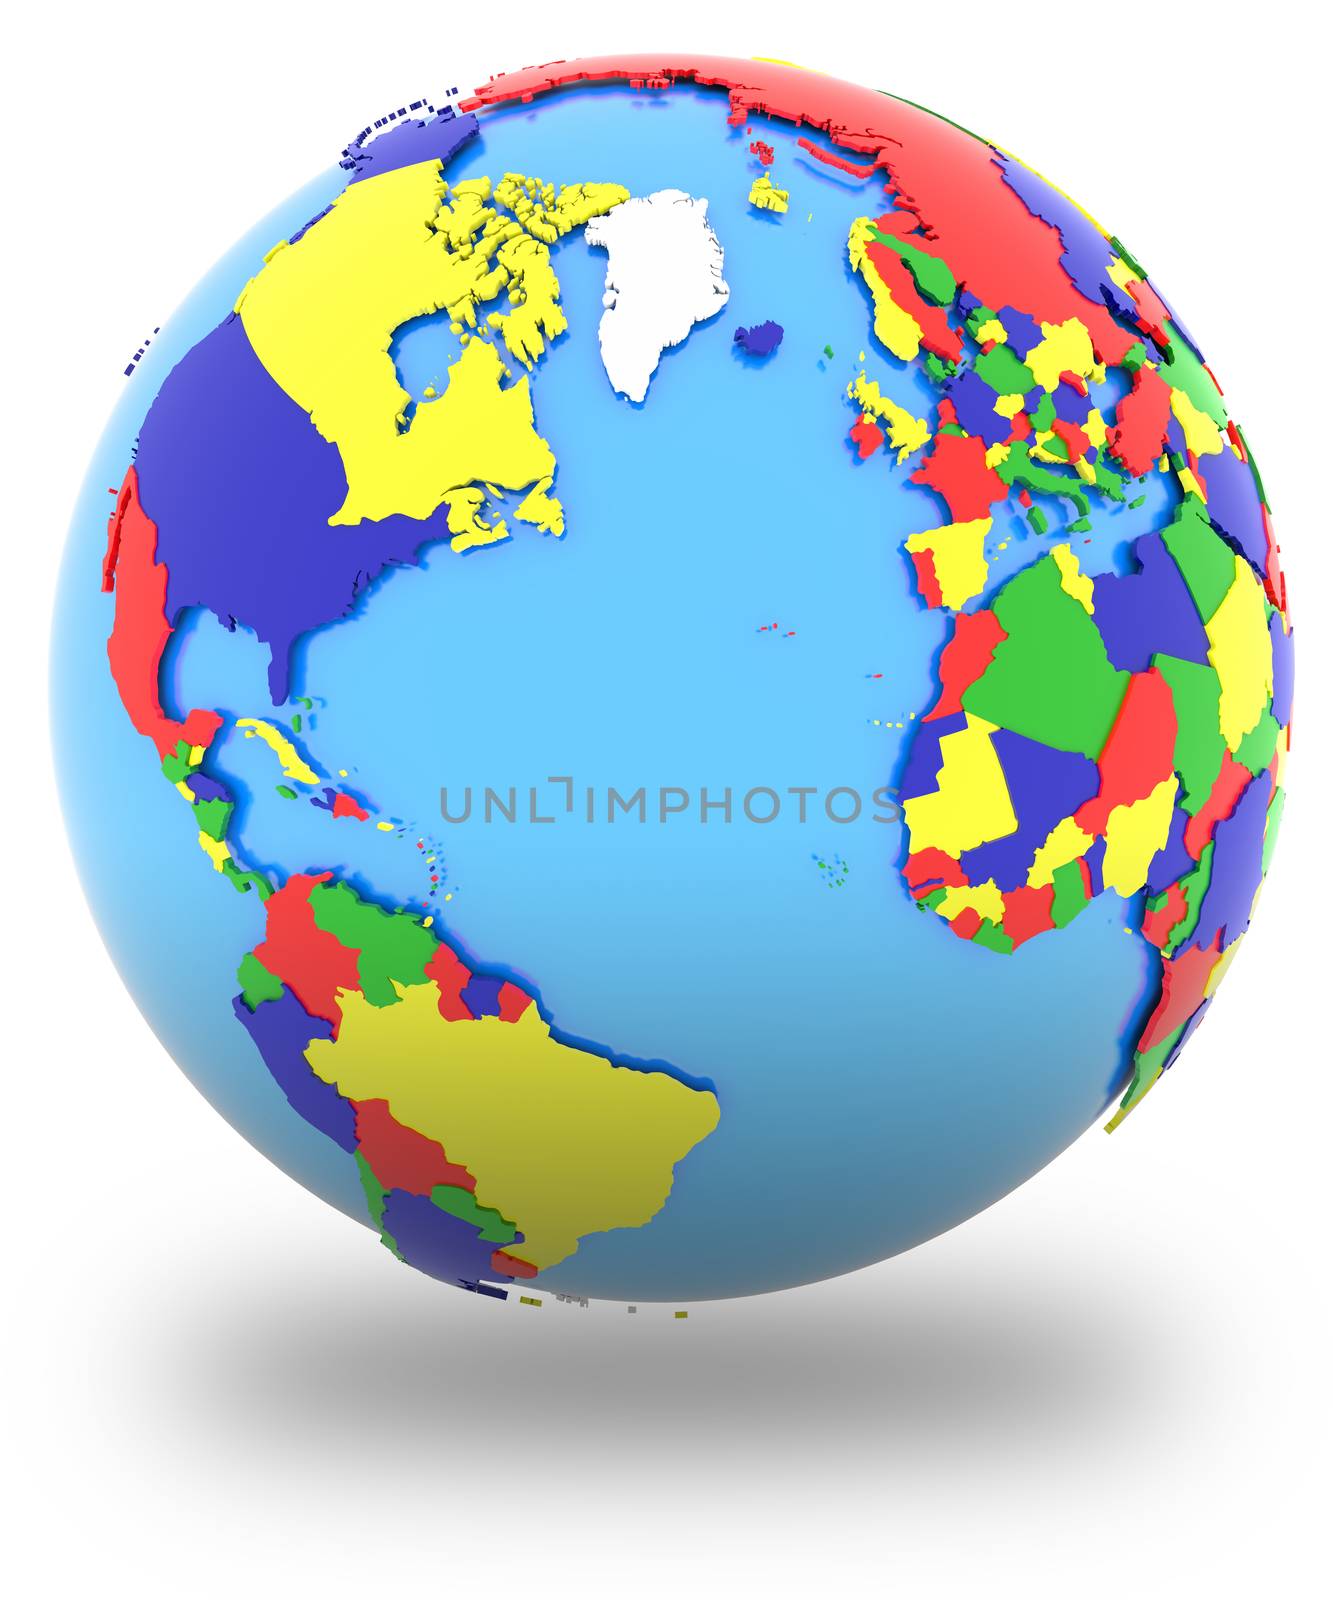 Western hemisphere on the globe by Harvepino